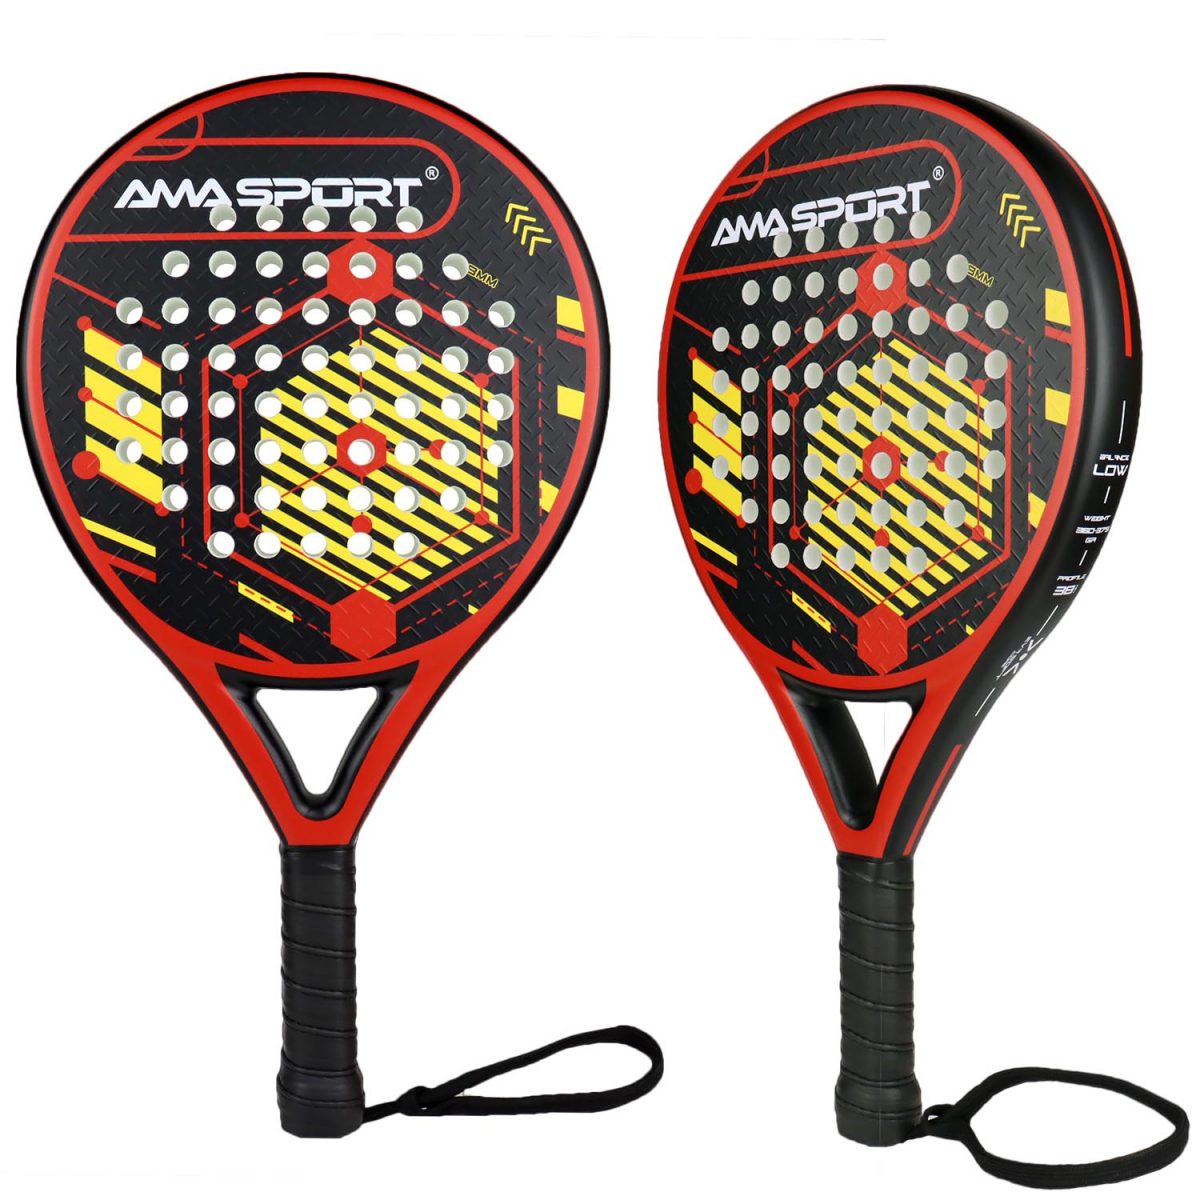 AMA SPORT Padle Paddle Racquet Tennis Racket Carbon Fiber Beach Tenis Padle EVA SOFT Memory Core 38mm